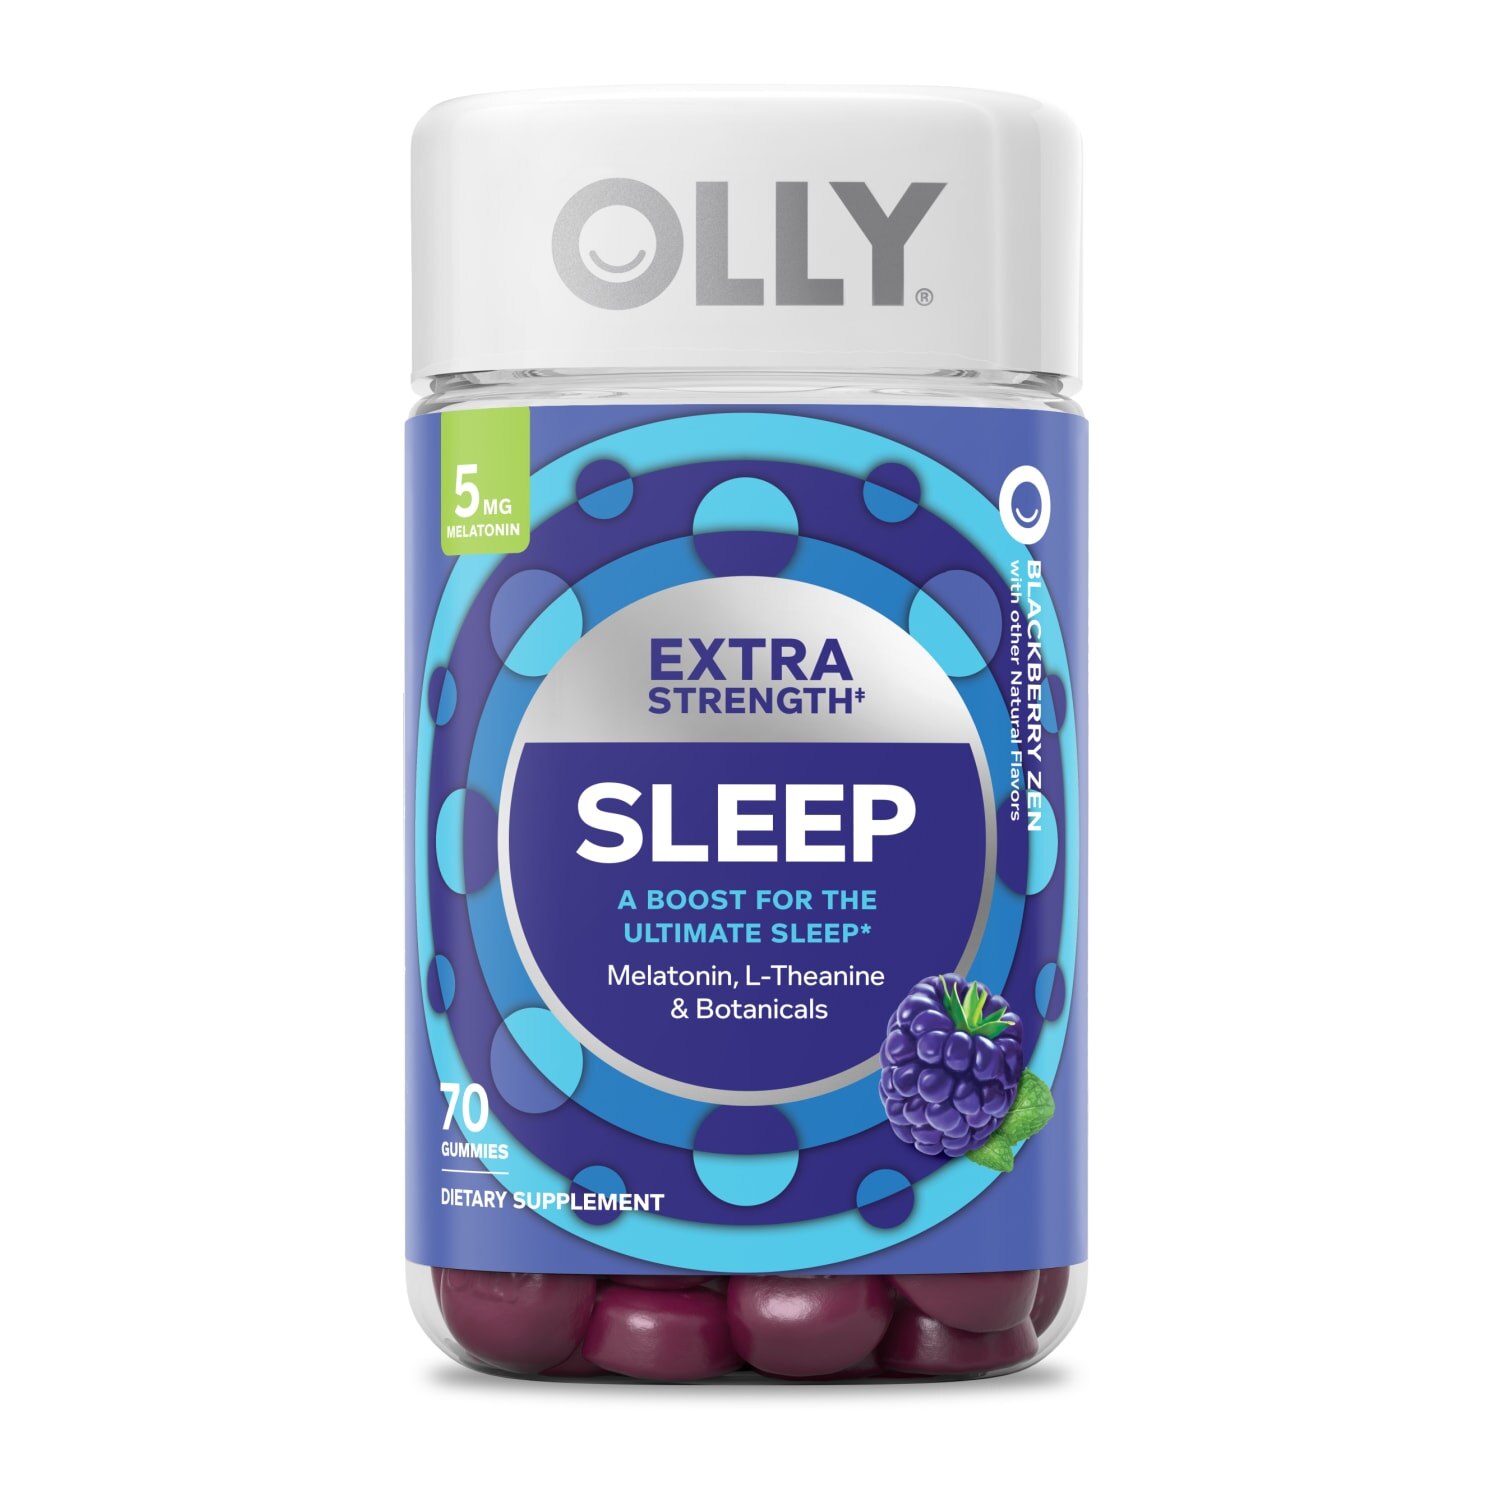 OLLY Extra Strength Sleep Gummies, 5mg Melatonin, Sleep Aid, Blackberry Mint, 70CT